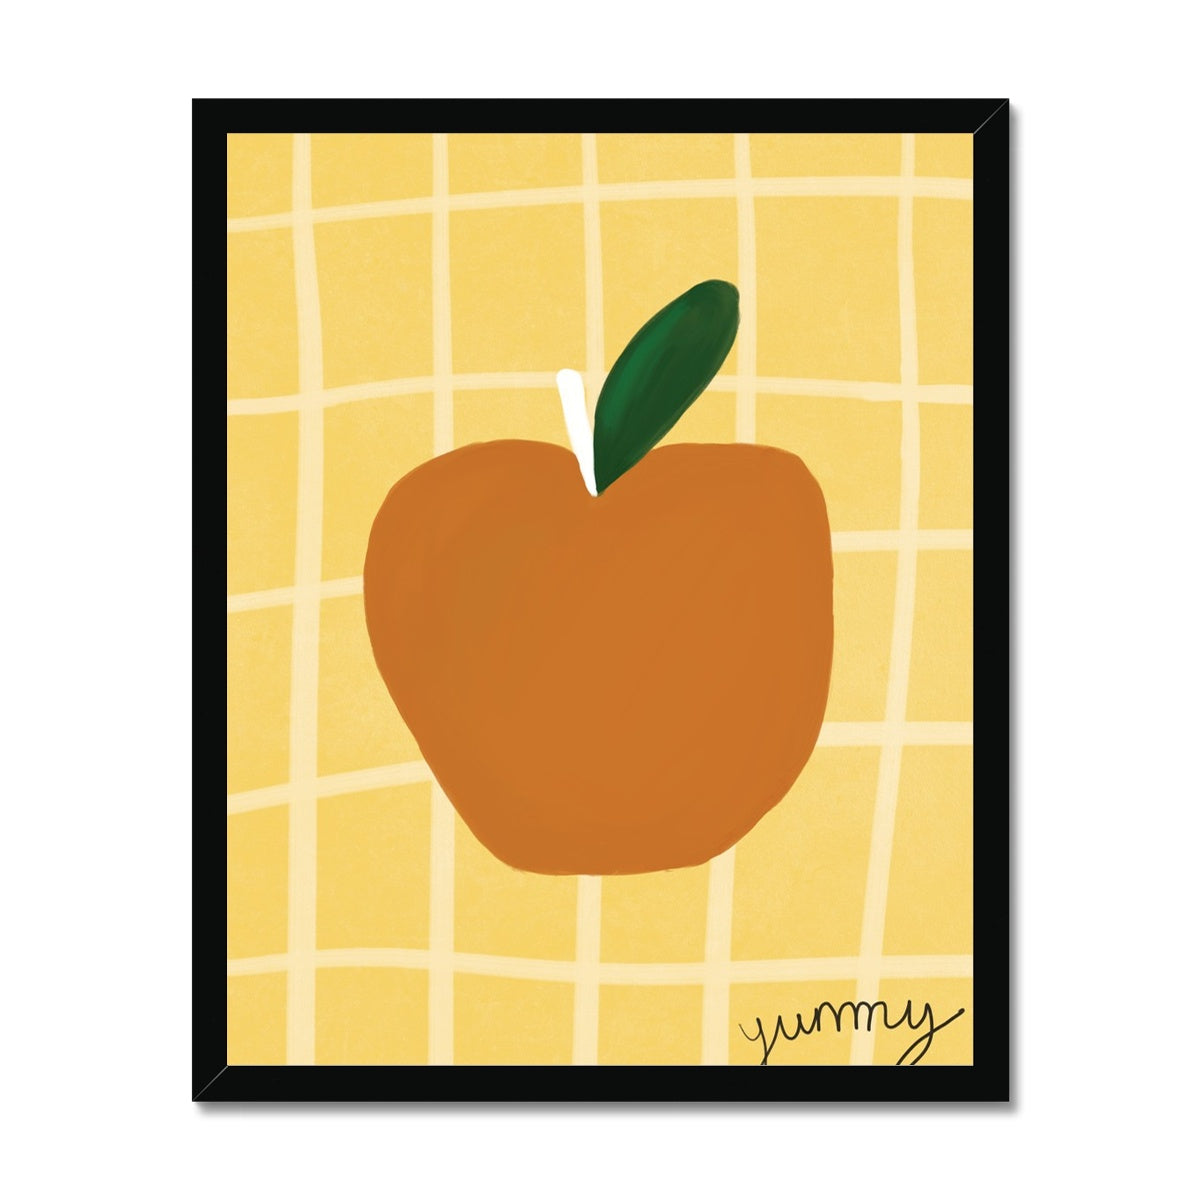 Yummy Apple Print - Yellow, Brown Framed Print